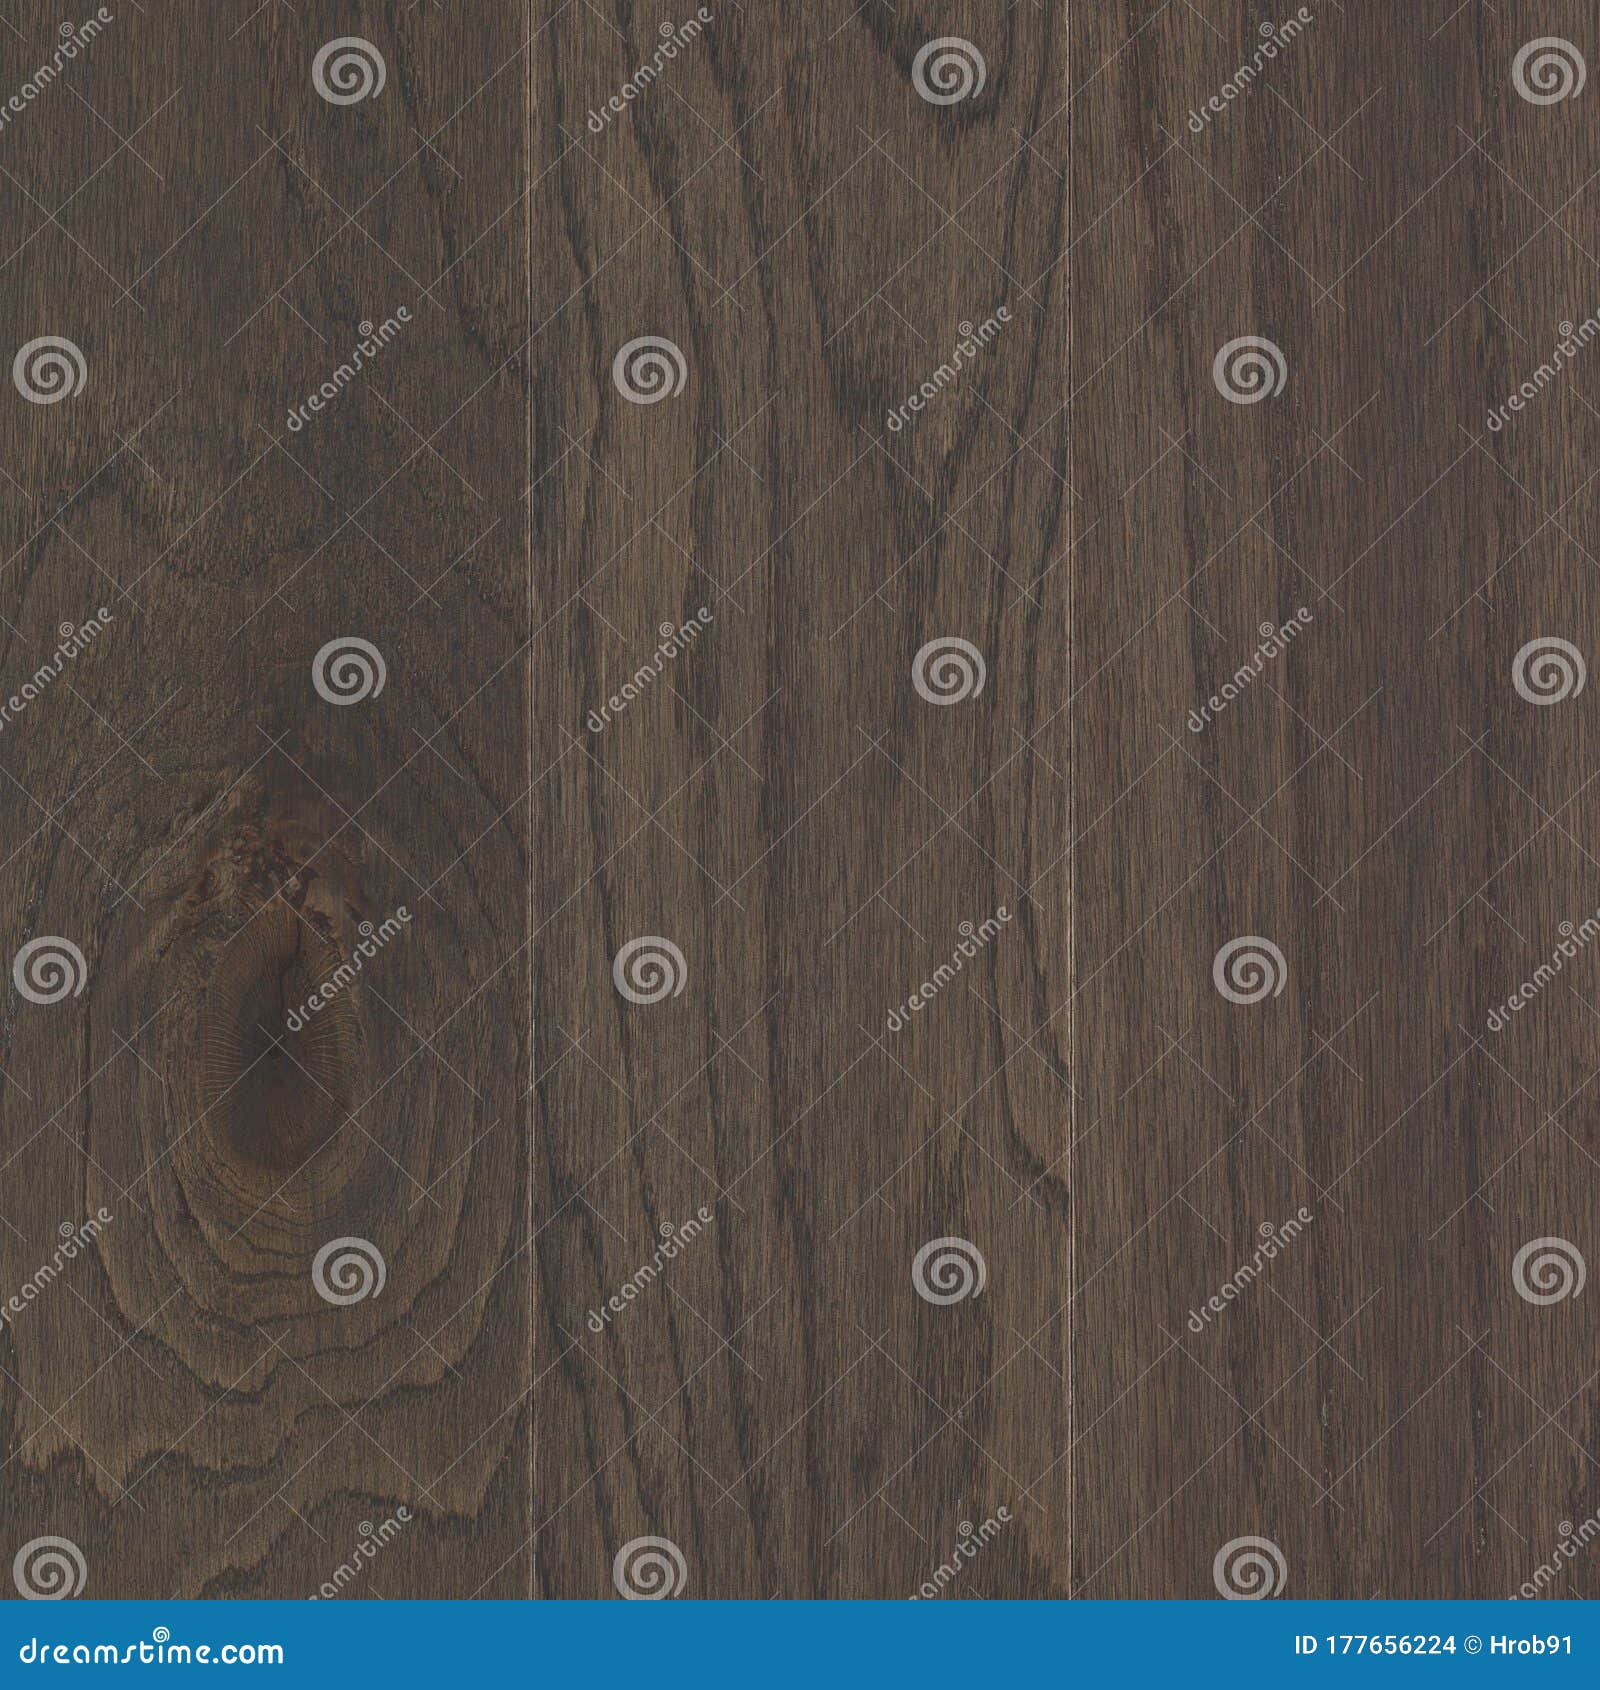 mohawk flooring engineered hardwood oak texture background